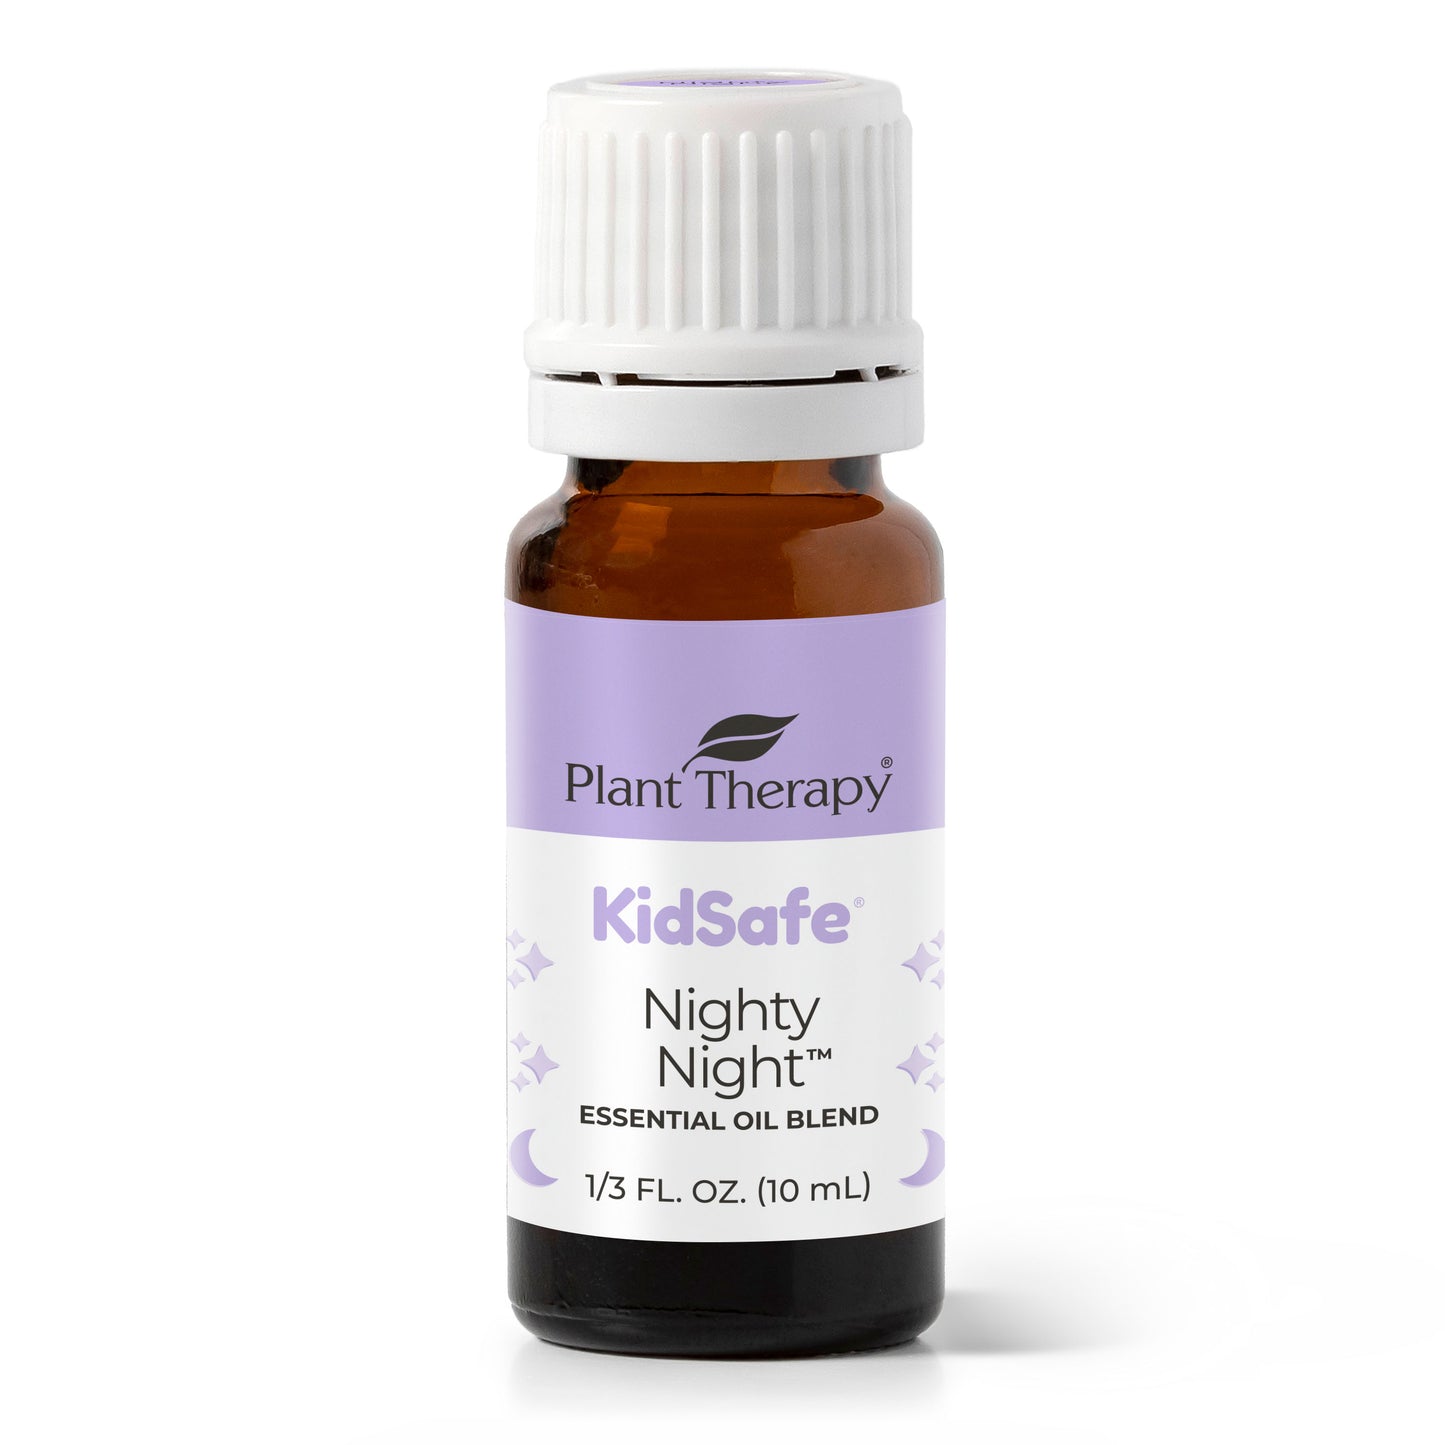 Nighty Night KidSafe Essential Oil front label